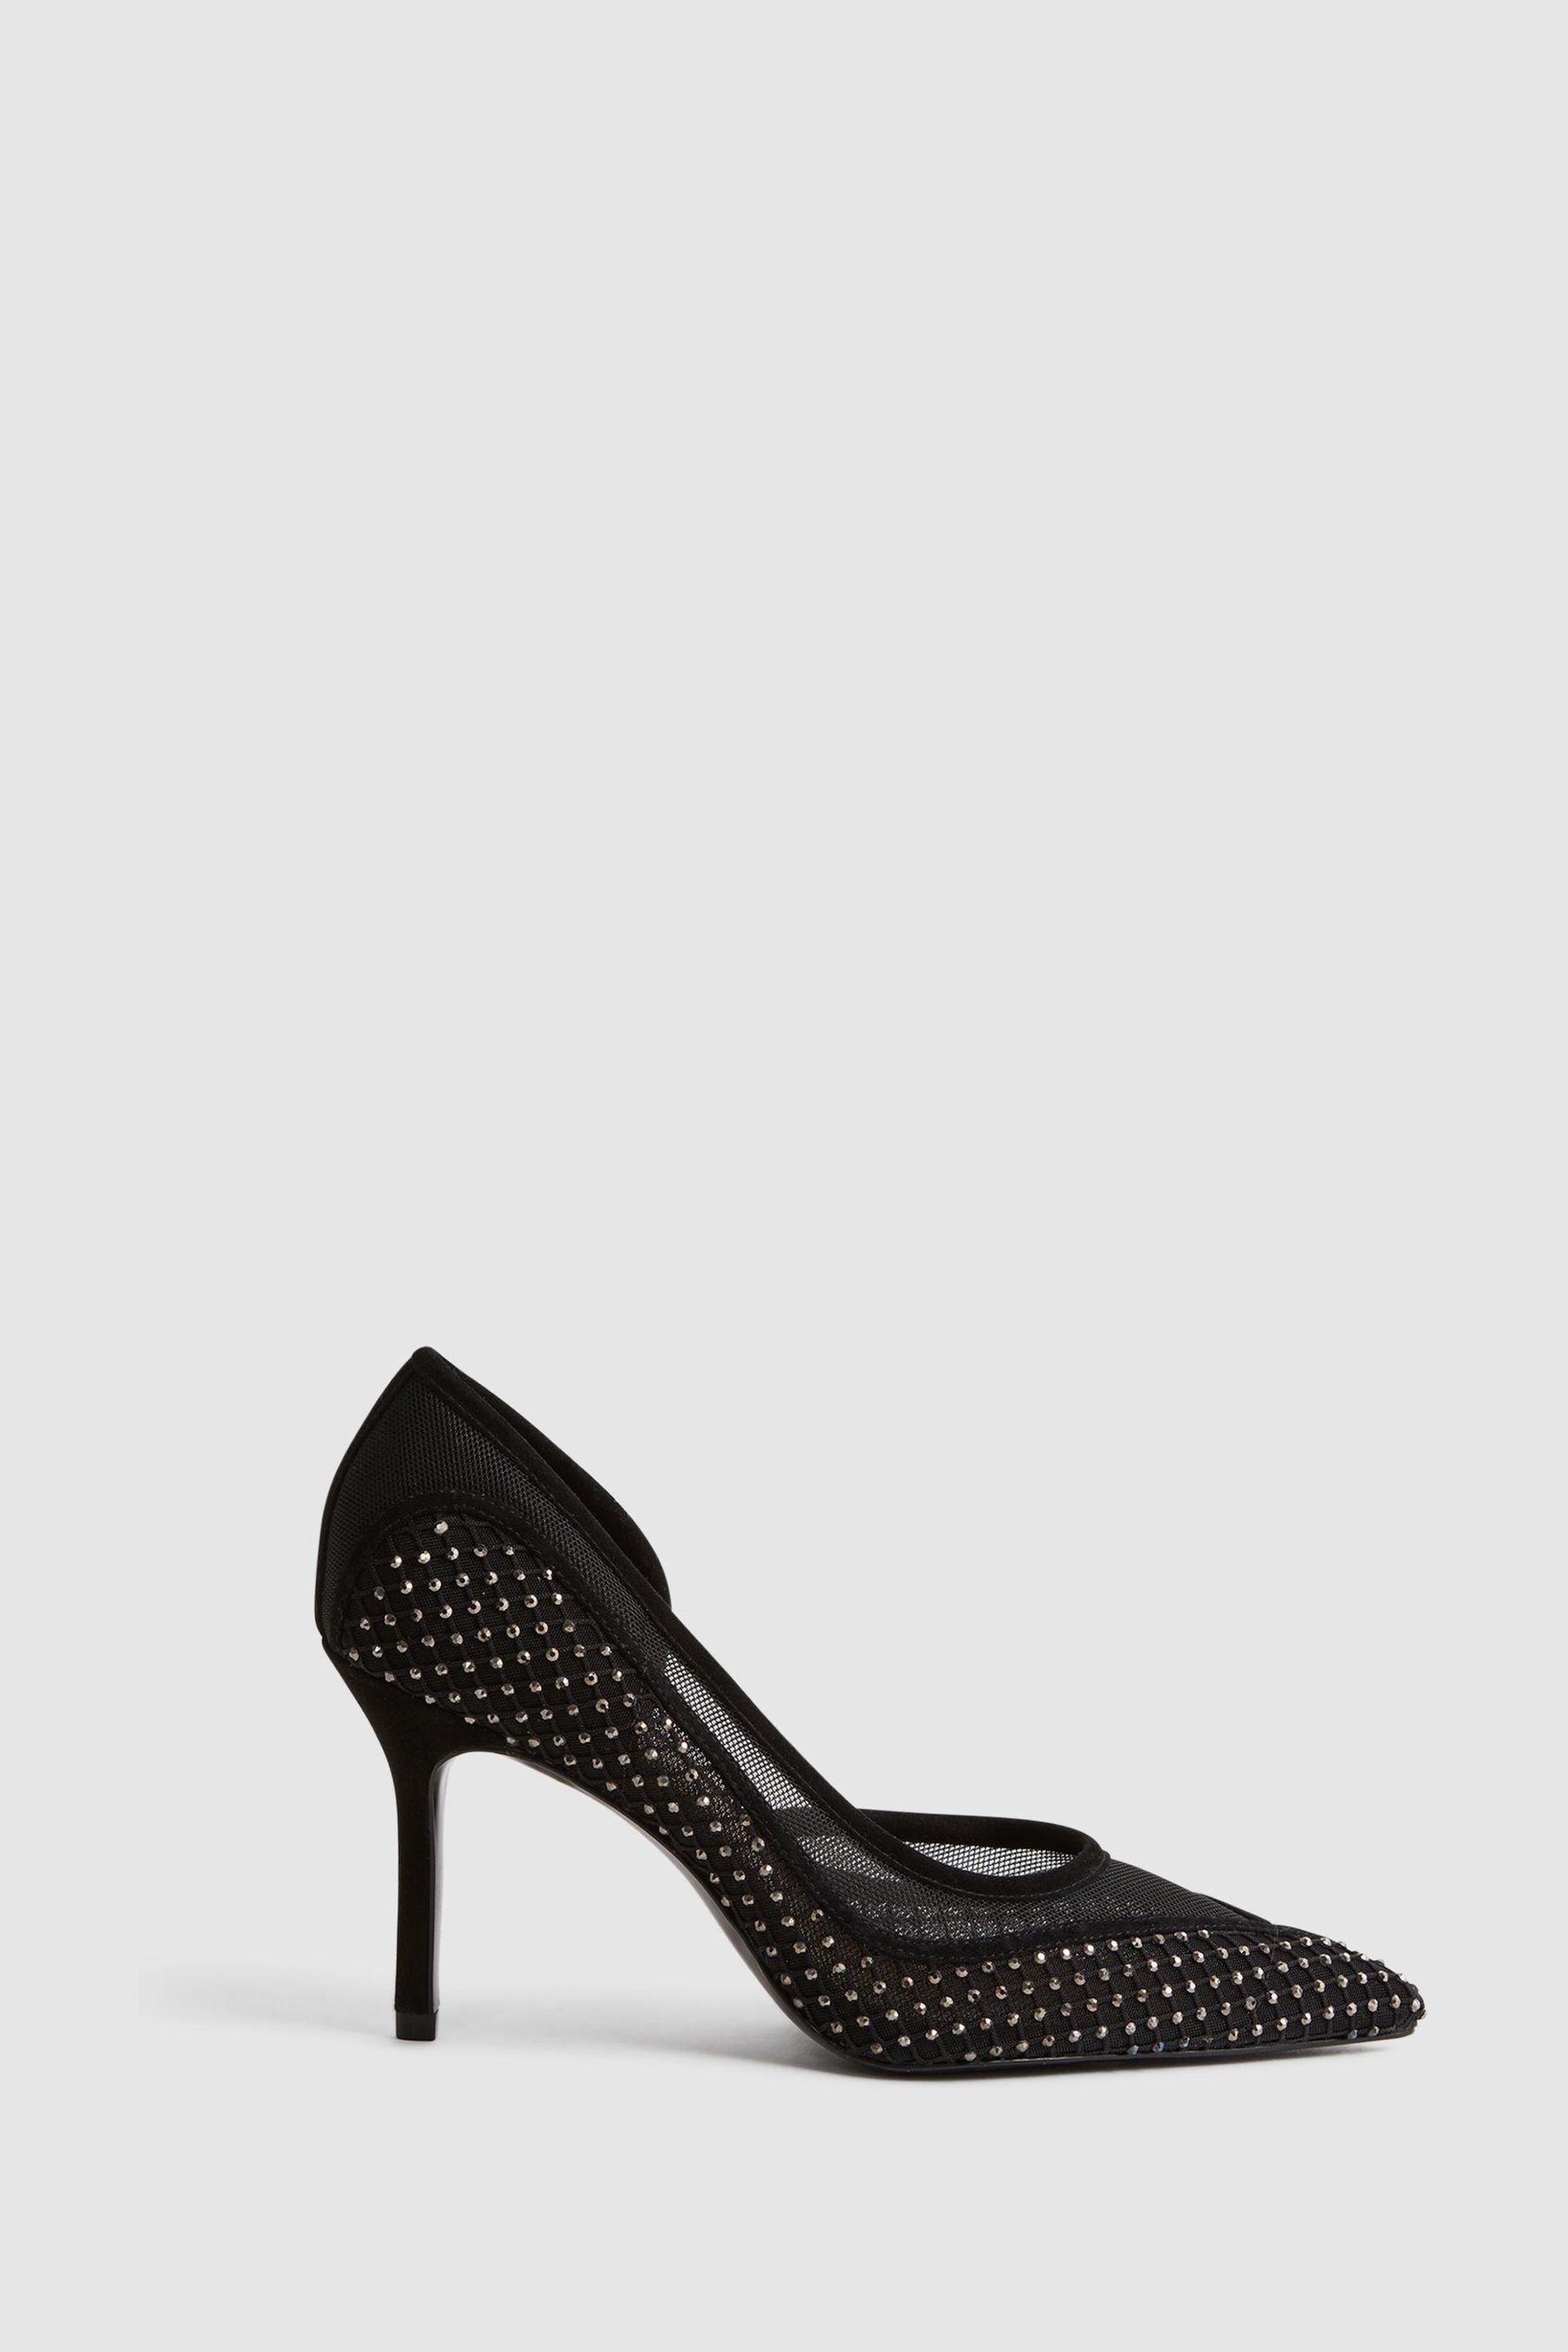 Reiss Keri - Black Embellished Mesh Court Shoes, Uk 6 Eu 39